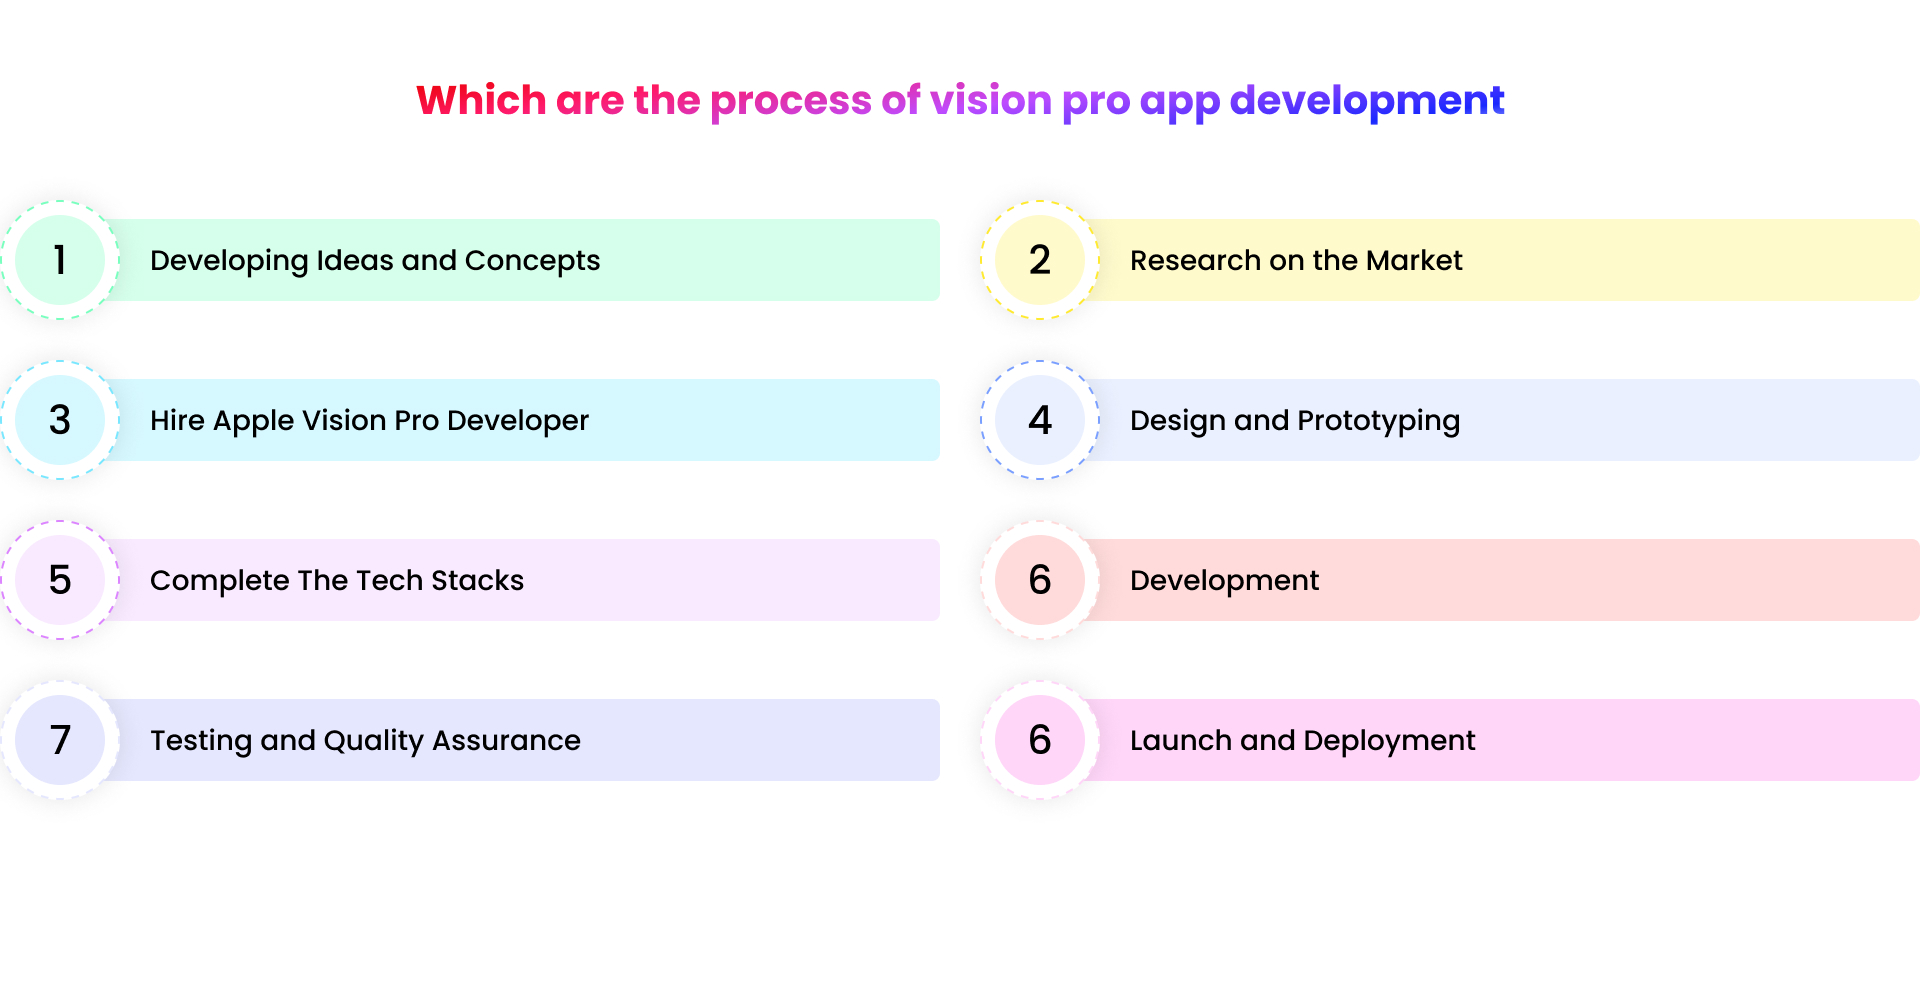 Process of vision pro app